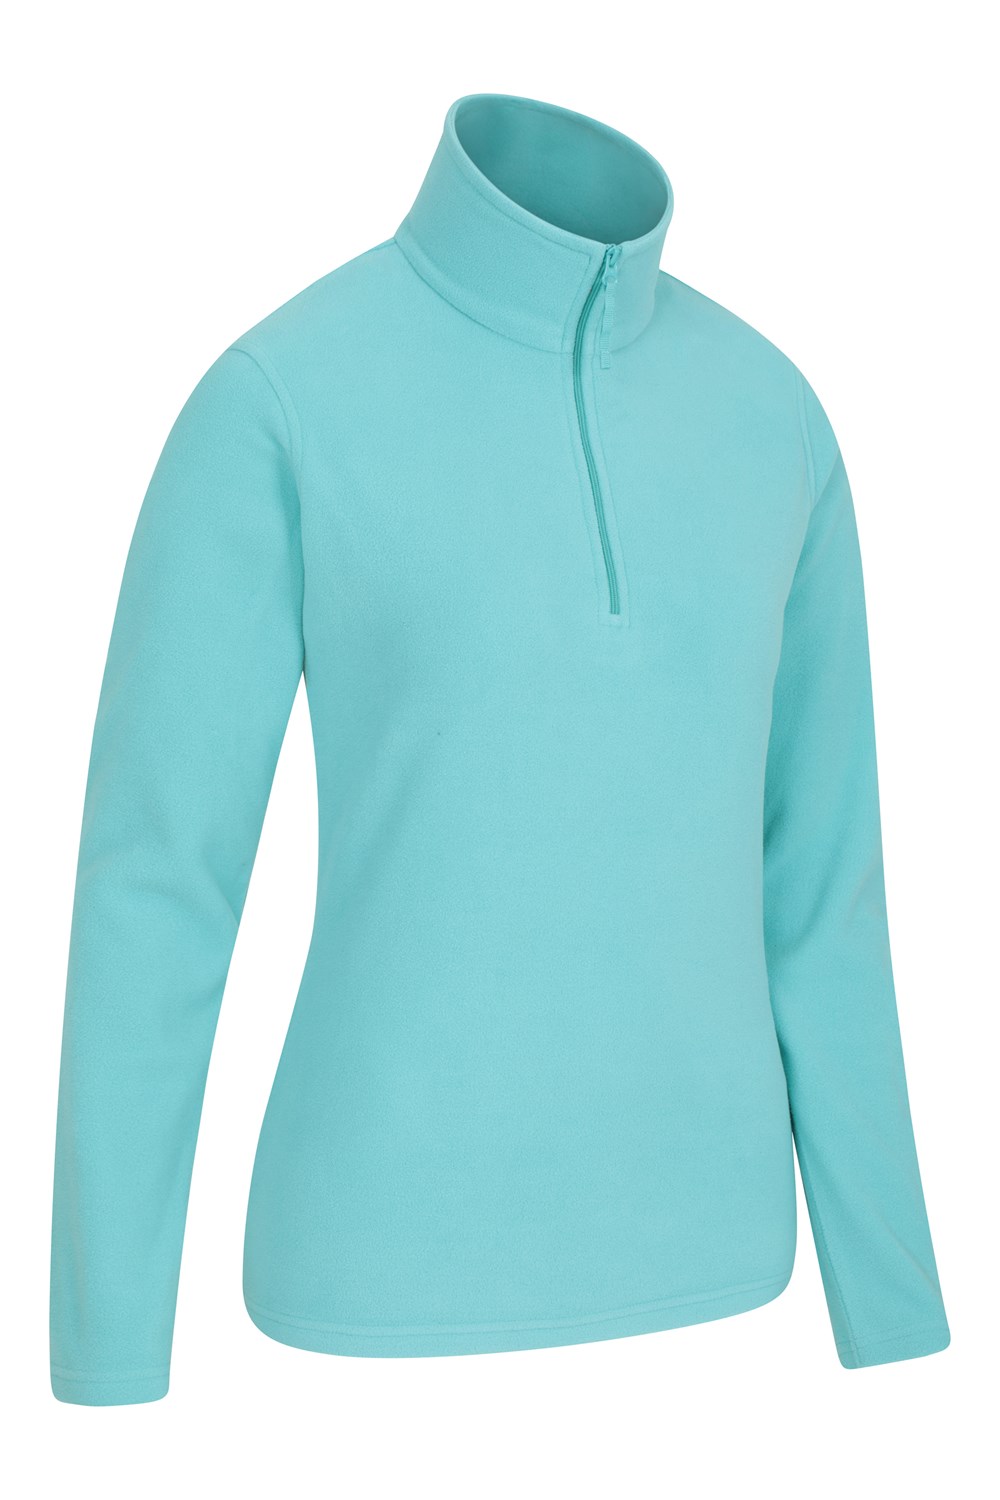 Mountain Warehouse Womens Half Zip Fleece Breathable Pullover Sweater ...